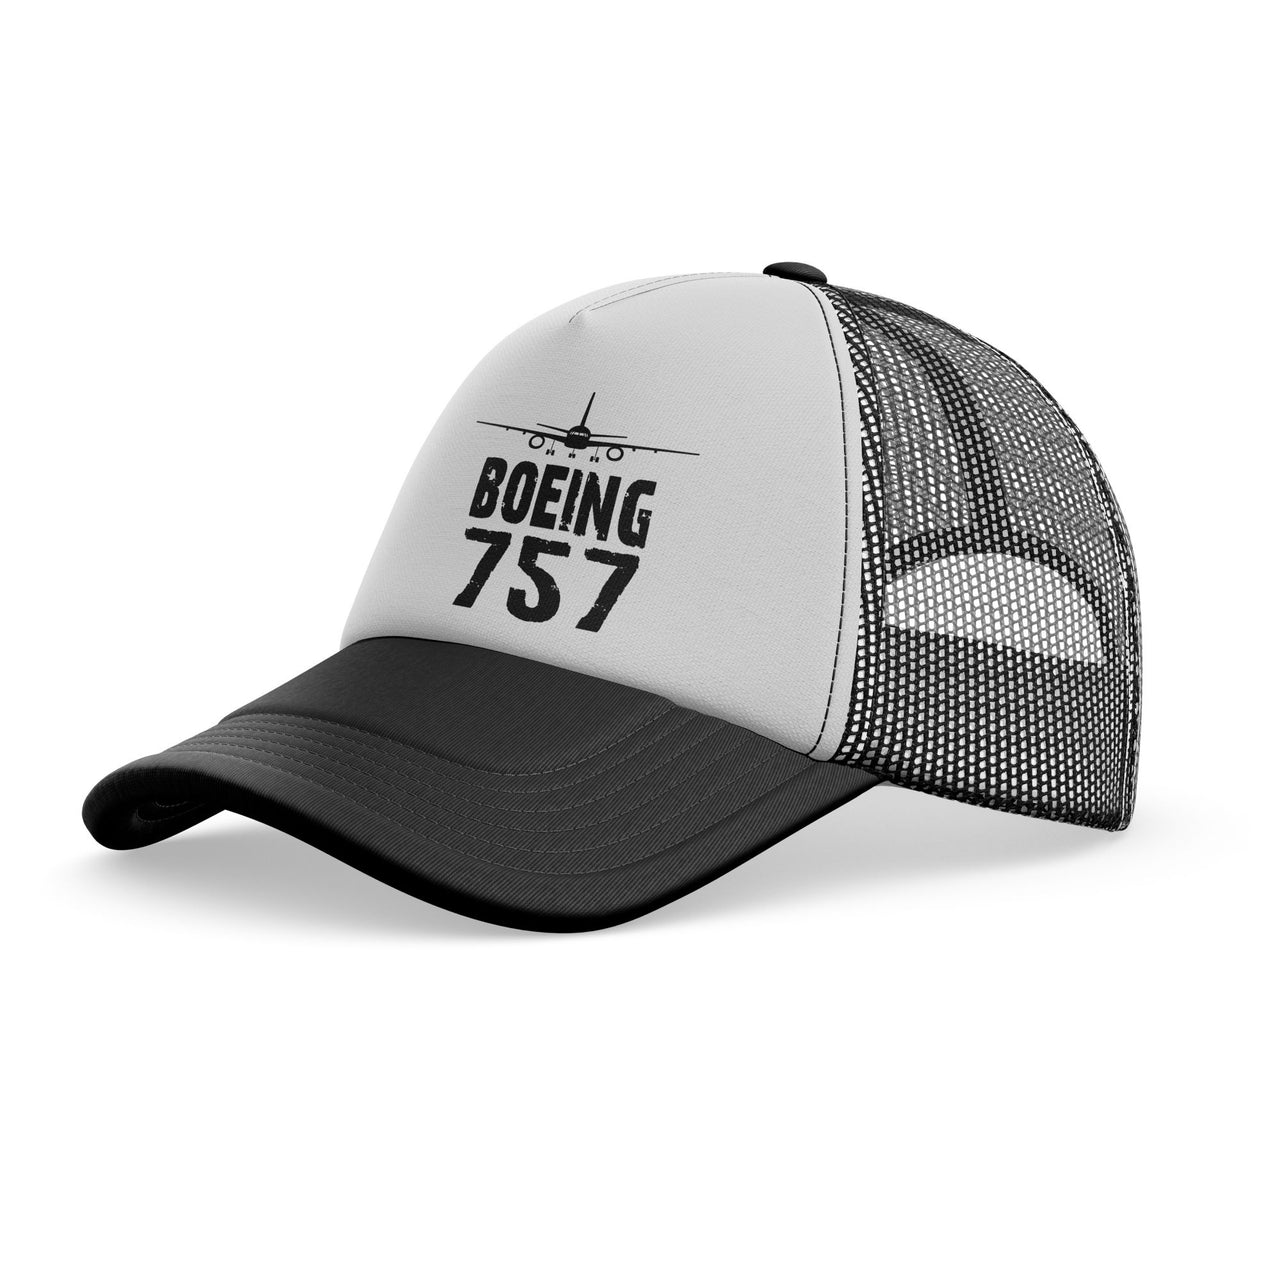 Boeing 757 & Plane Designed Trucker Caps & Hats